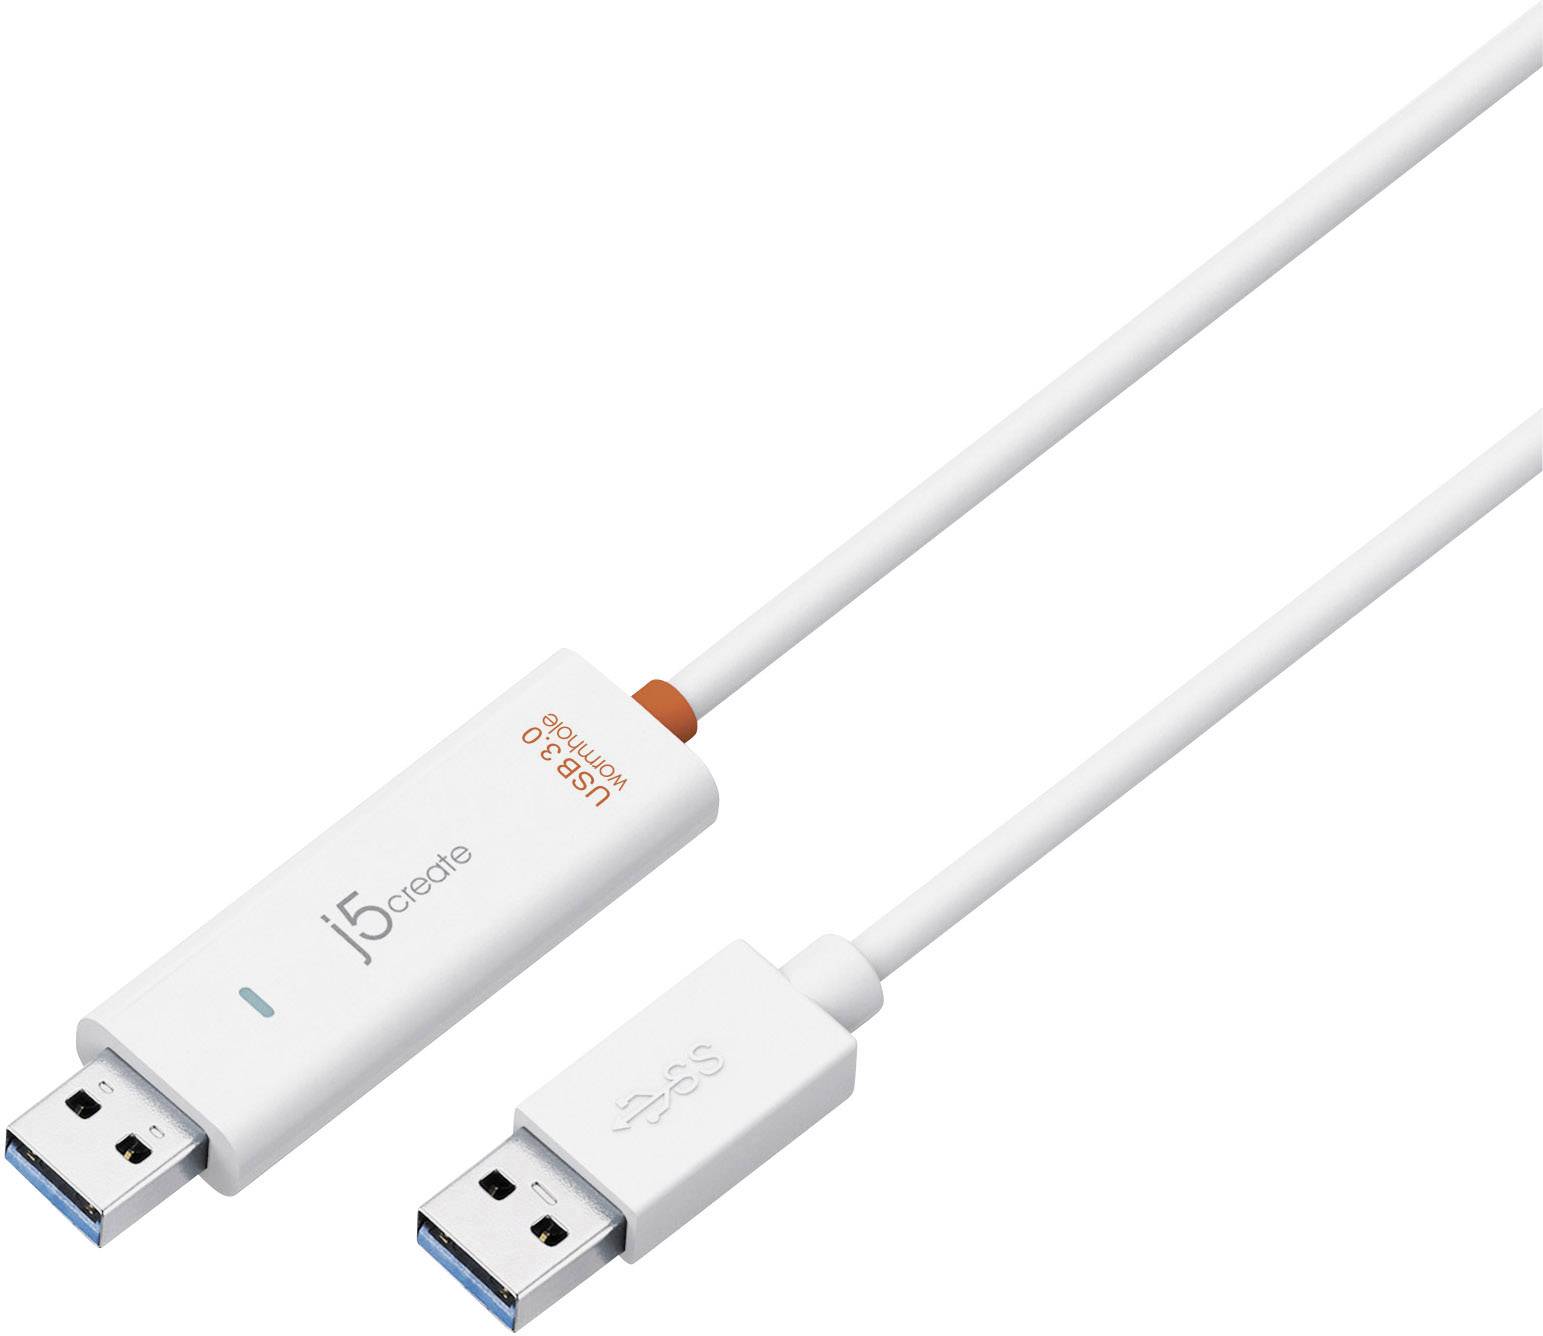 j5create USB Wormhole Switch/Data Link Cable White 1,5 m | Conrad.com